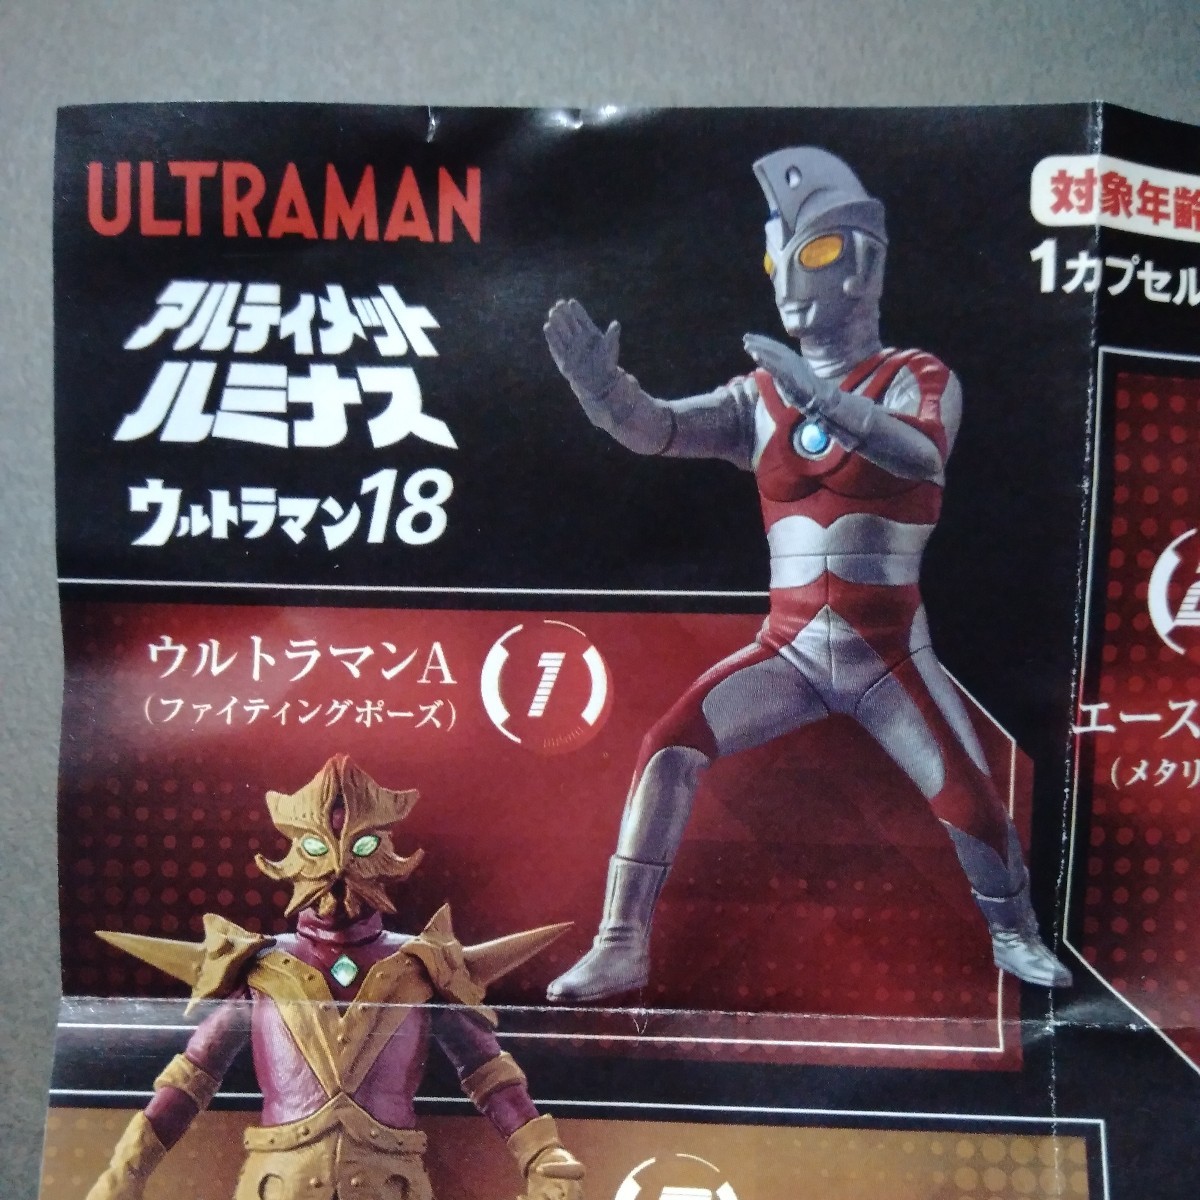 ruminas единица имеется Ultimate ruminas Ultraman 18 Ultraman A ( борьба Poe z) Ultraman Ace фигурка 